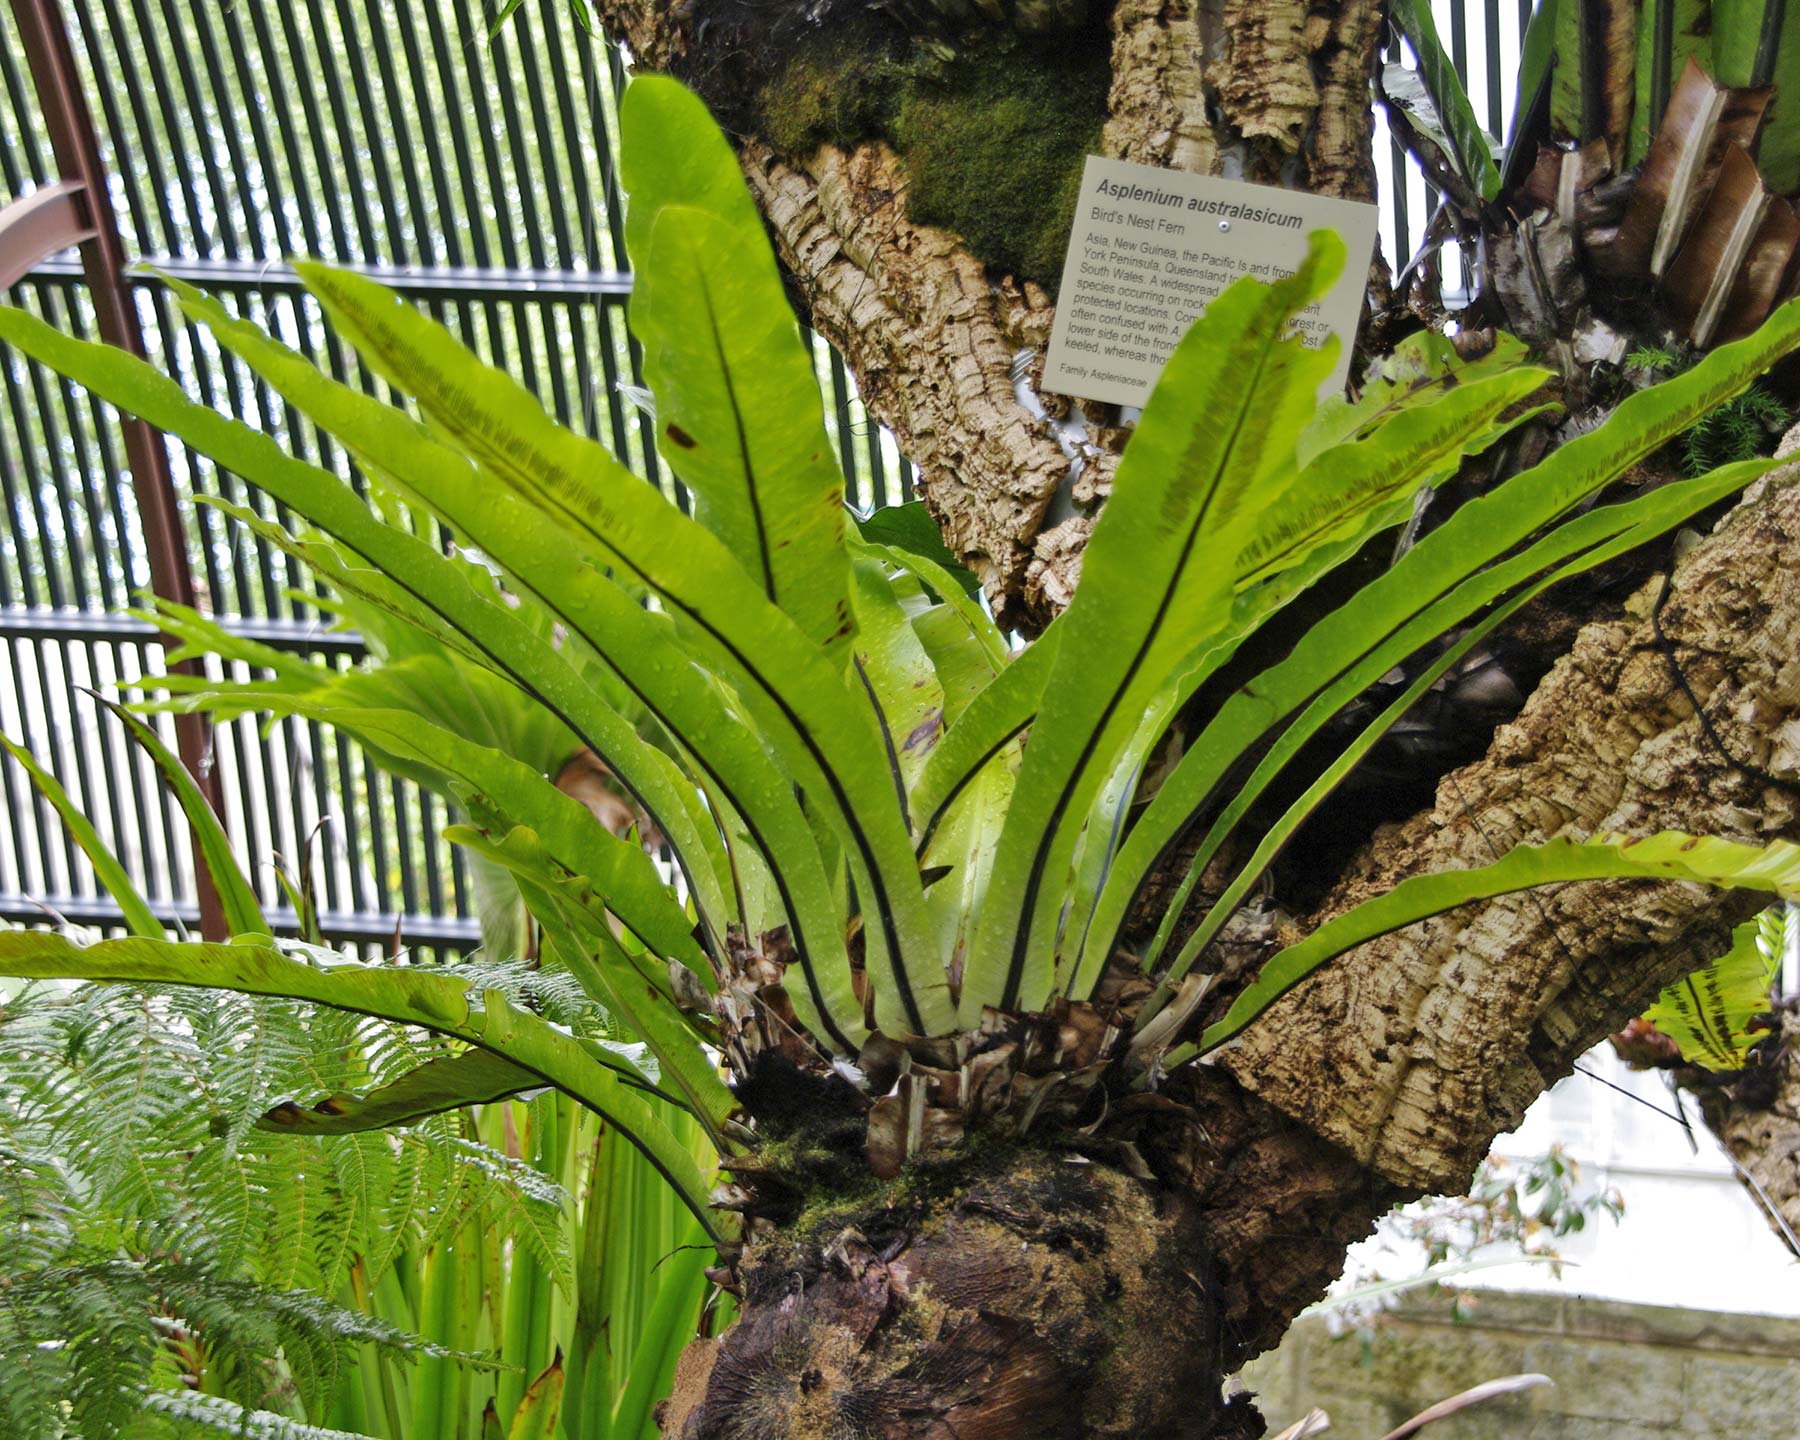 Asplenium australasicum - Birds Nest fern. Attach and grow on tree as seen in the Fern House Sydney Botanical Gardens